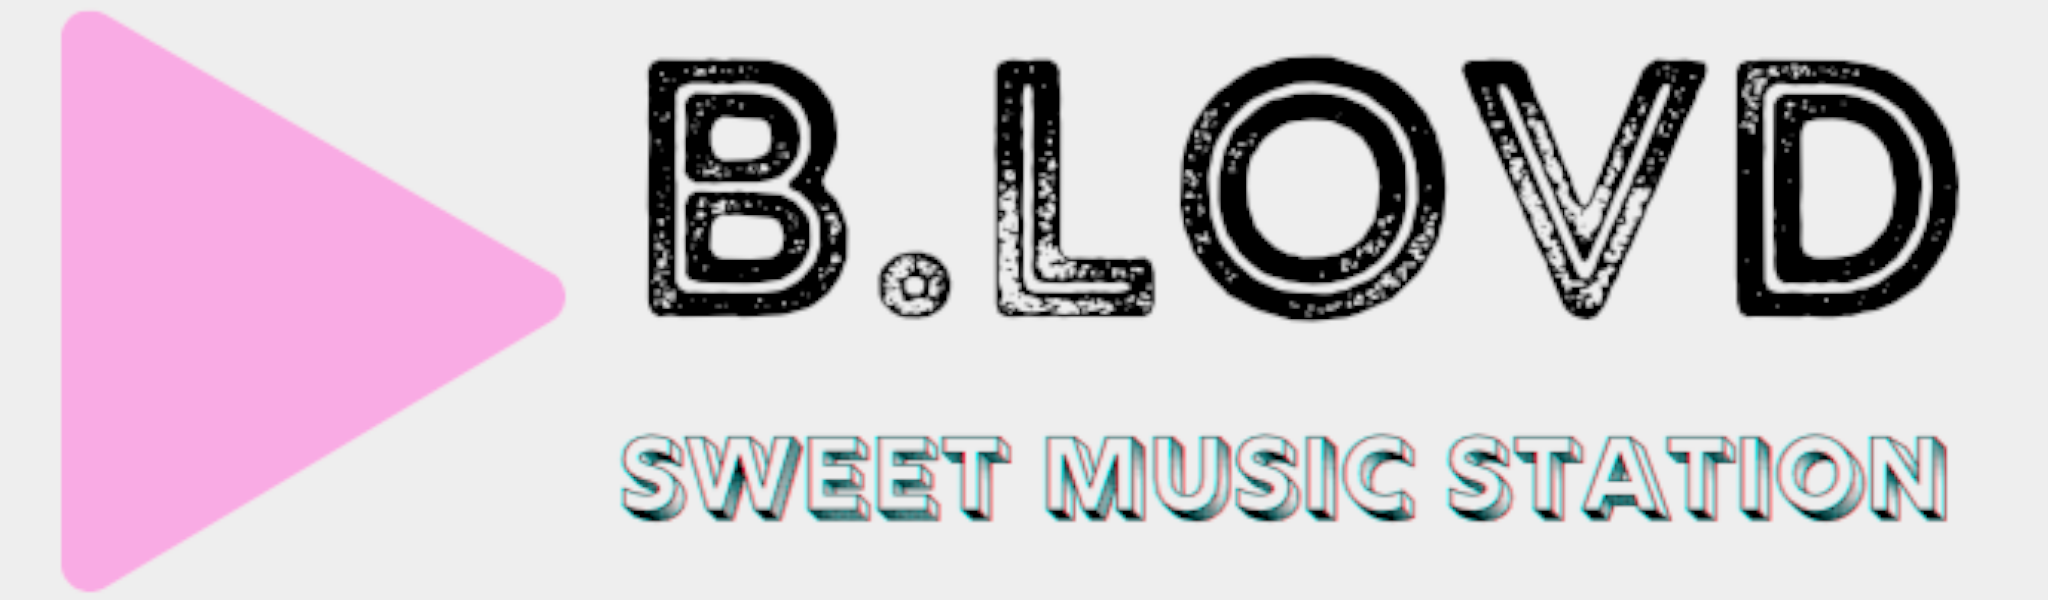 B.LOVD Sweet Music Station